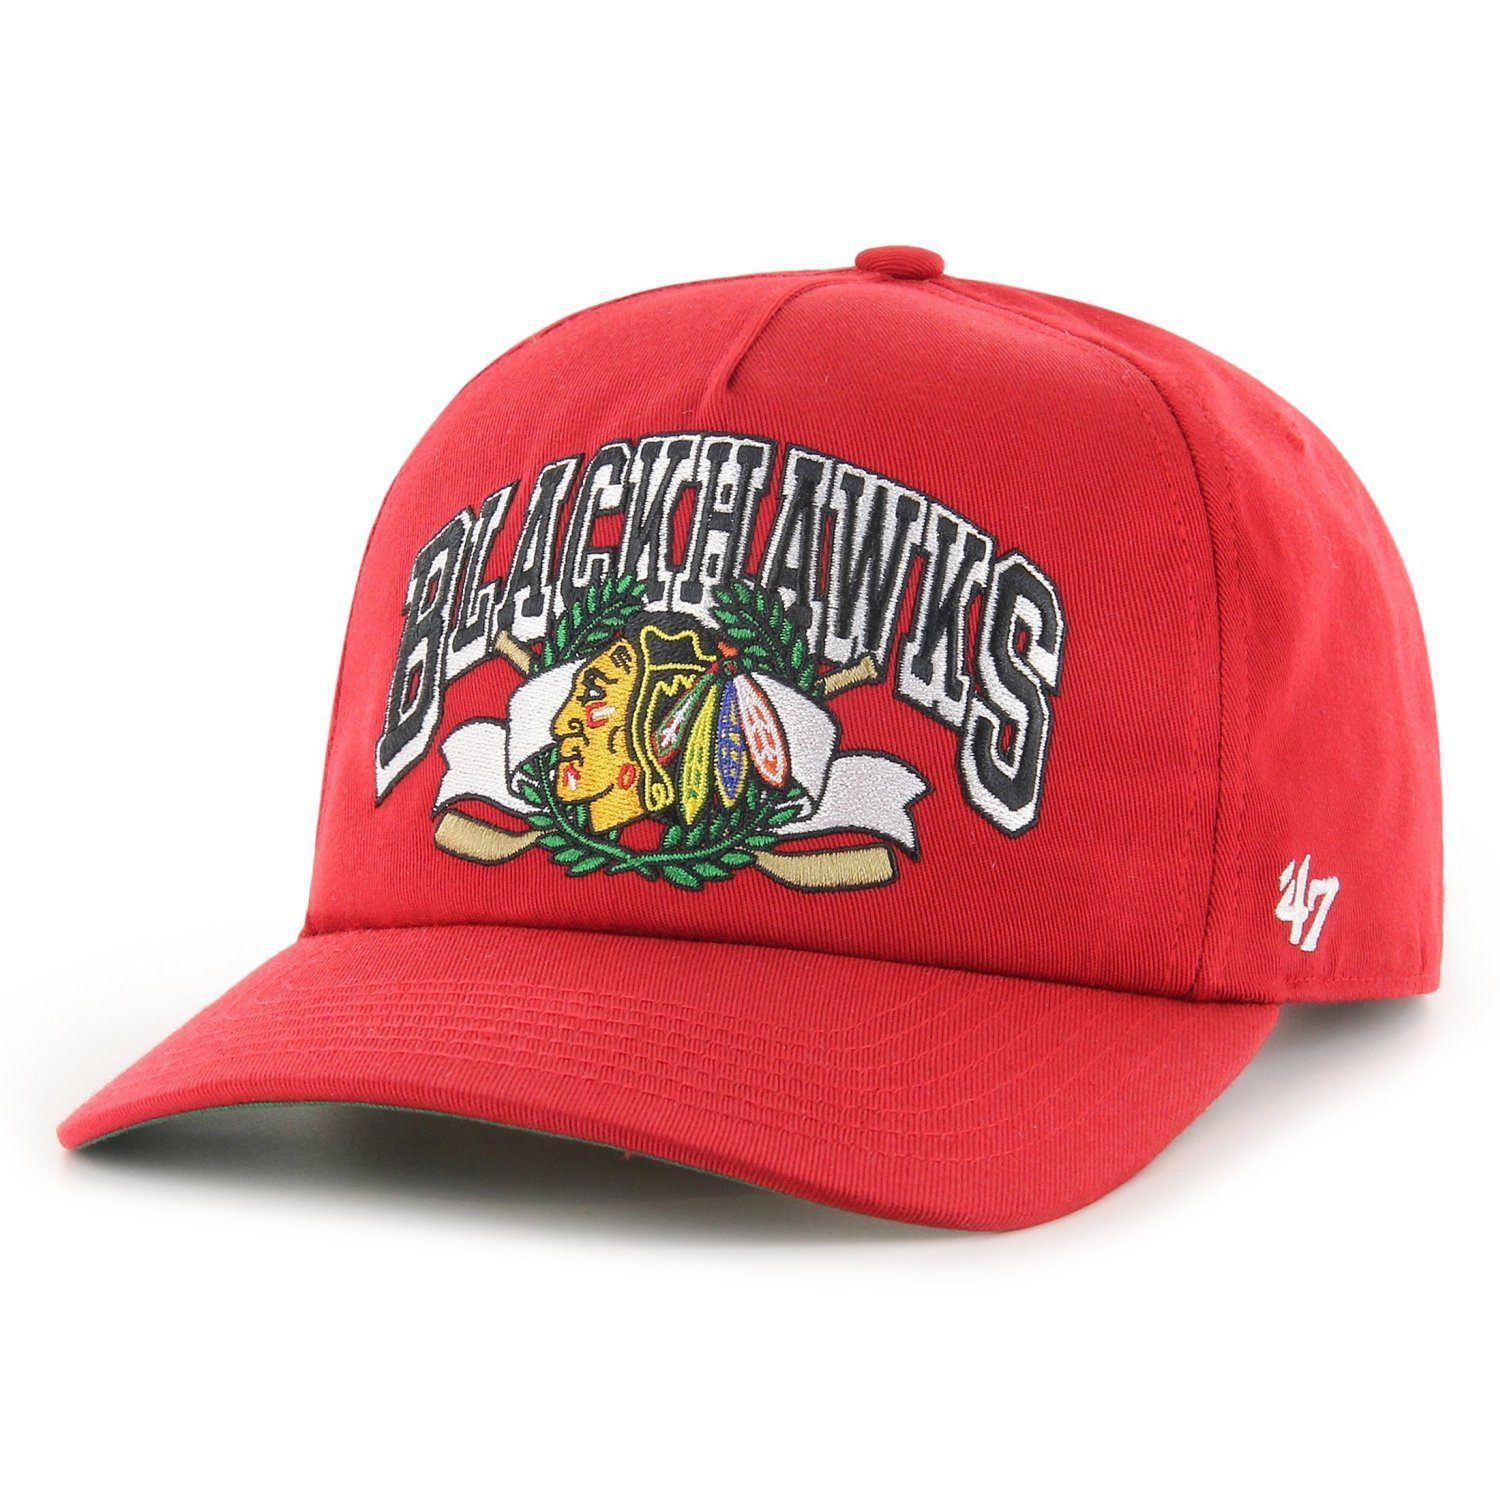 Snapback '47 Blackhawks Chicago LAUREL Cap Brand